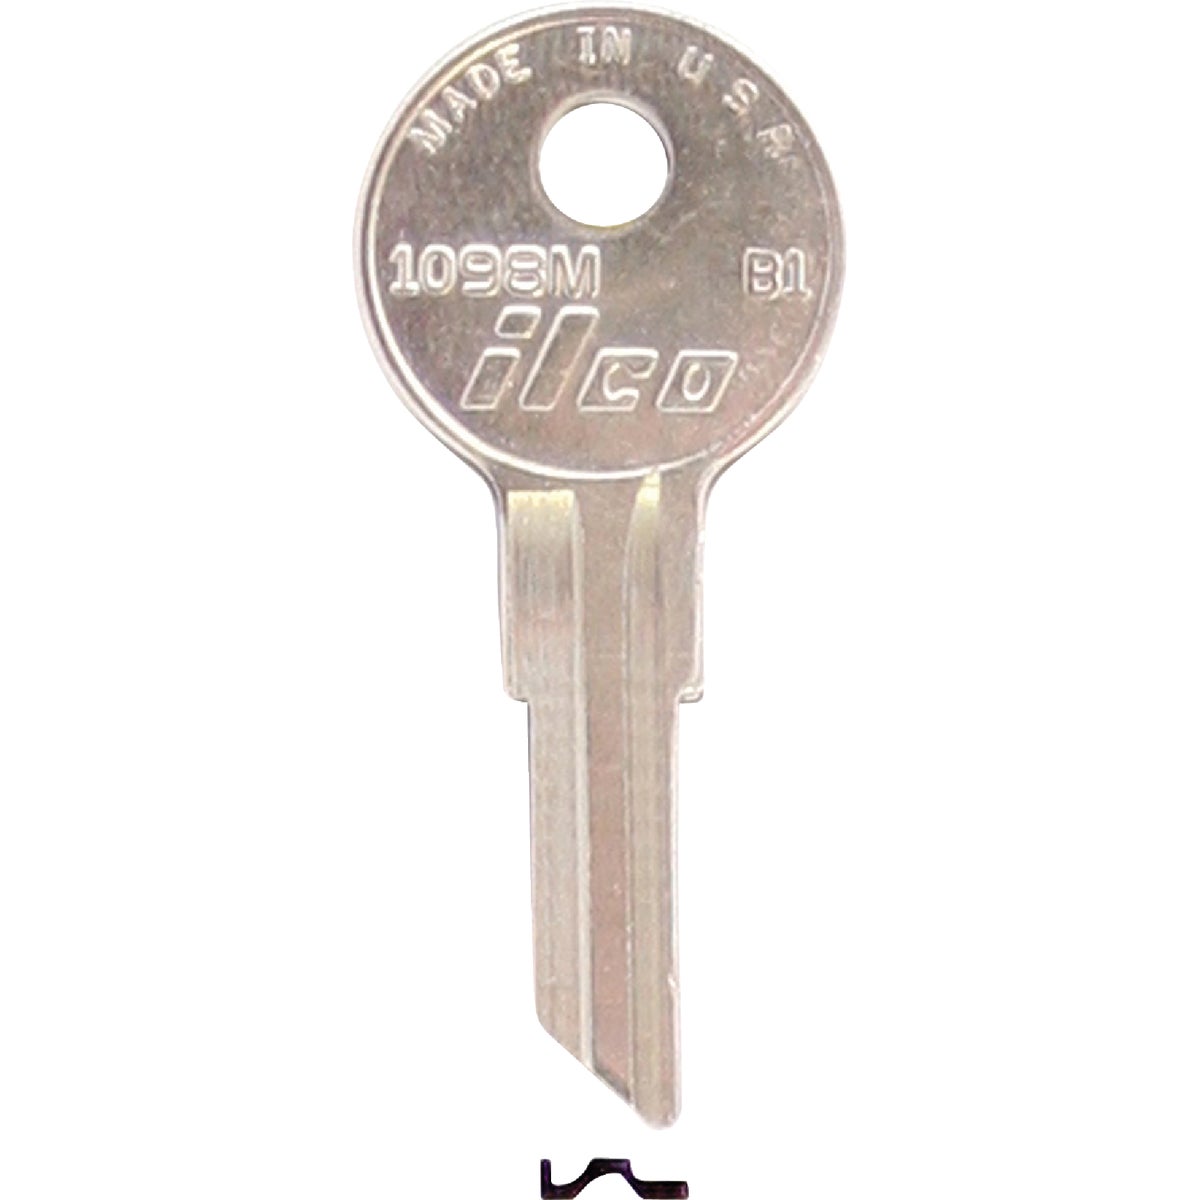 ILCO Briggs Nickel Plated Lawn Mower Key, 1098M (10-Pack)